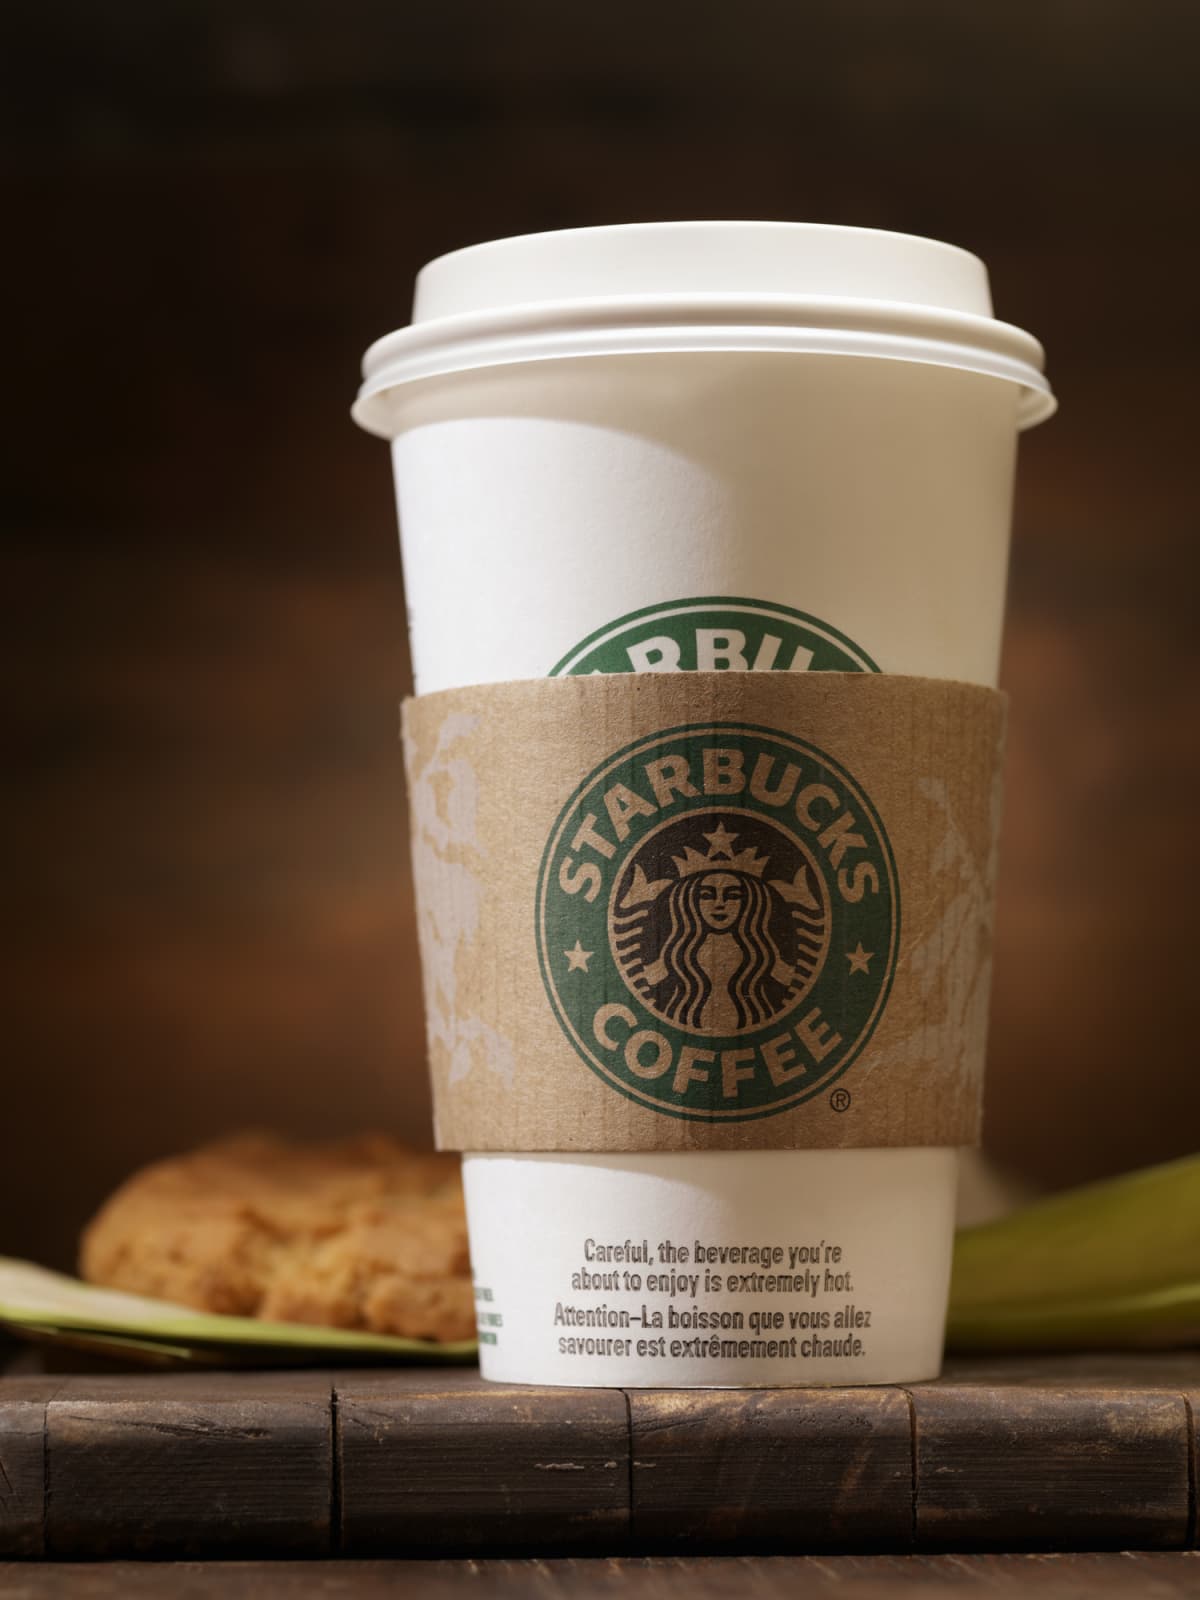 Starbucks grande coffee cup on wood surface